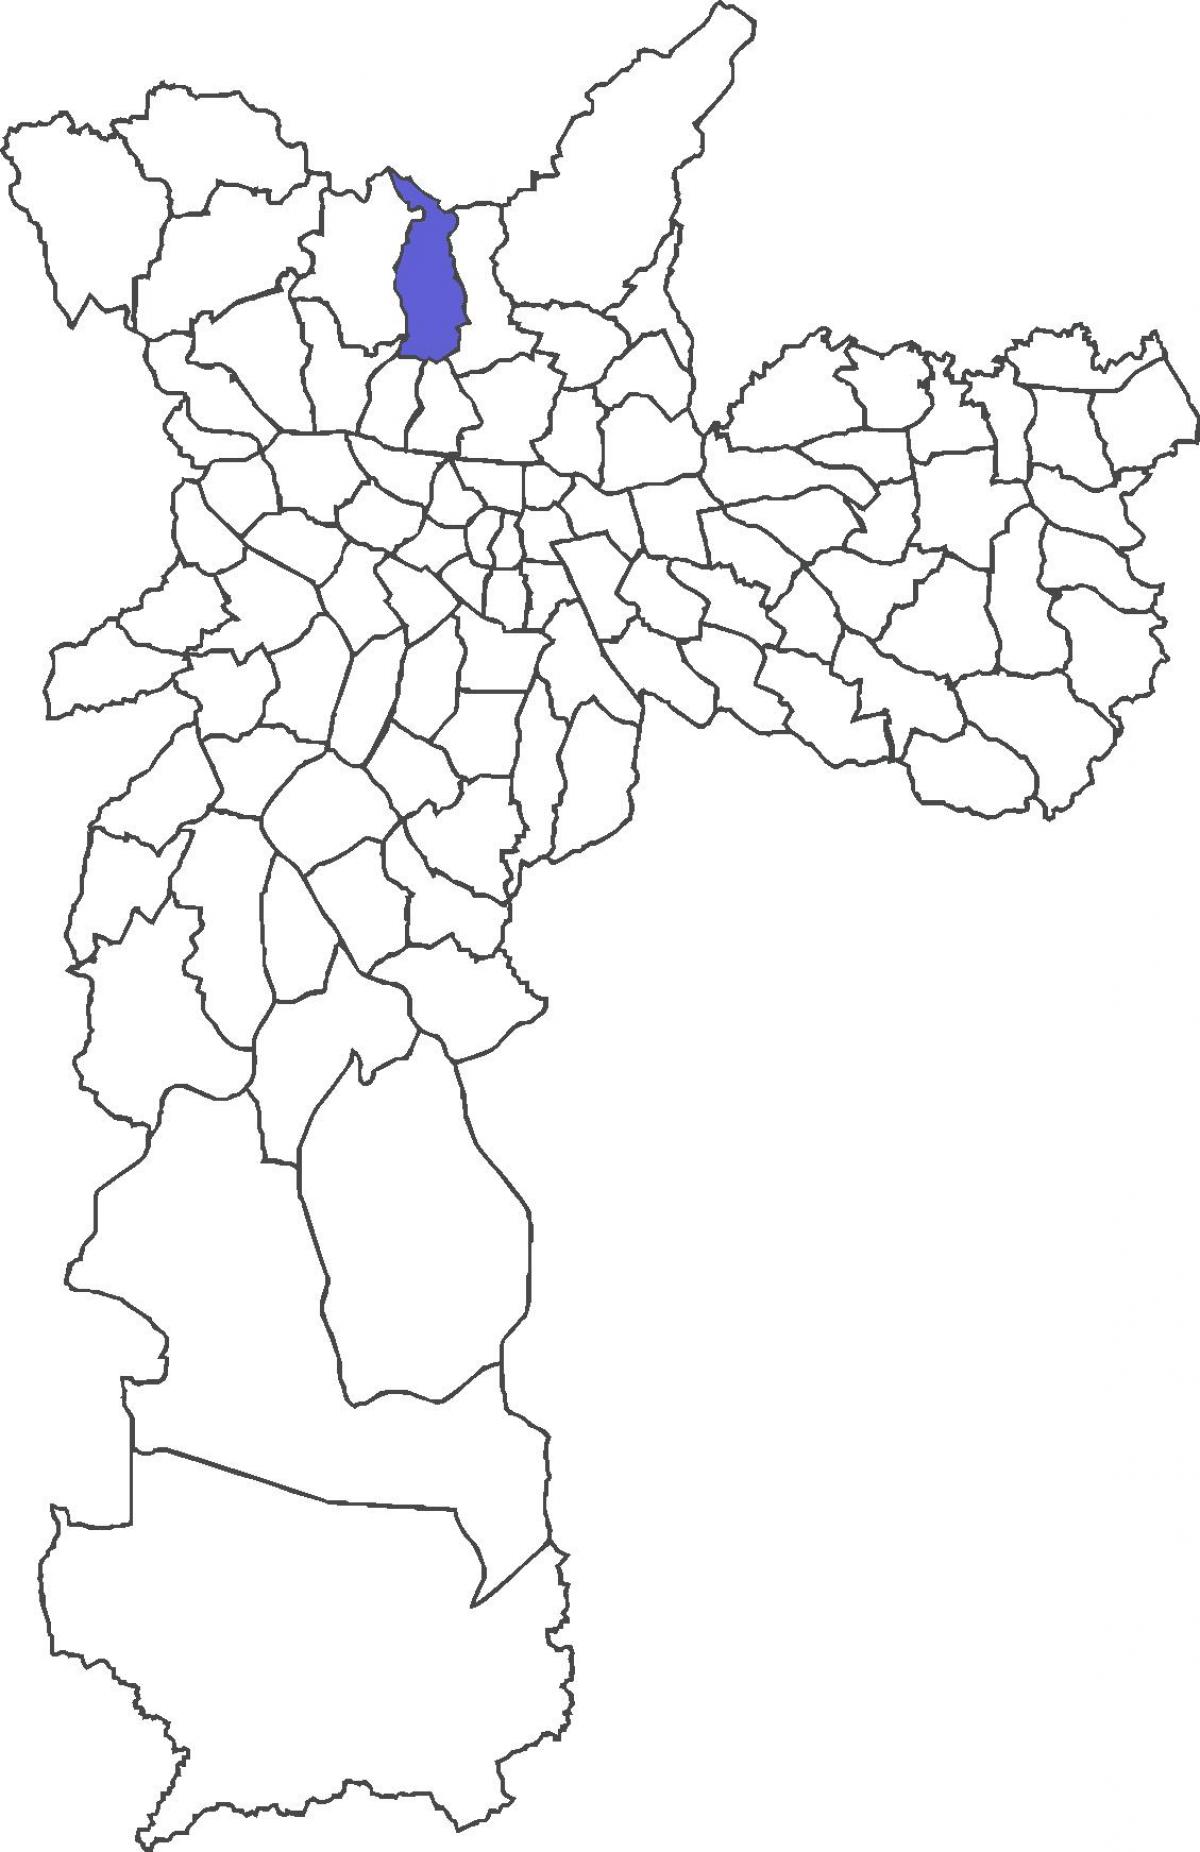 Kaart van Cachoeirinha distrik